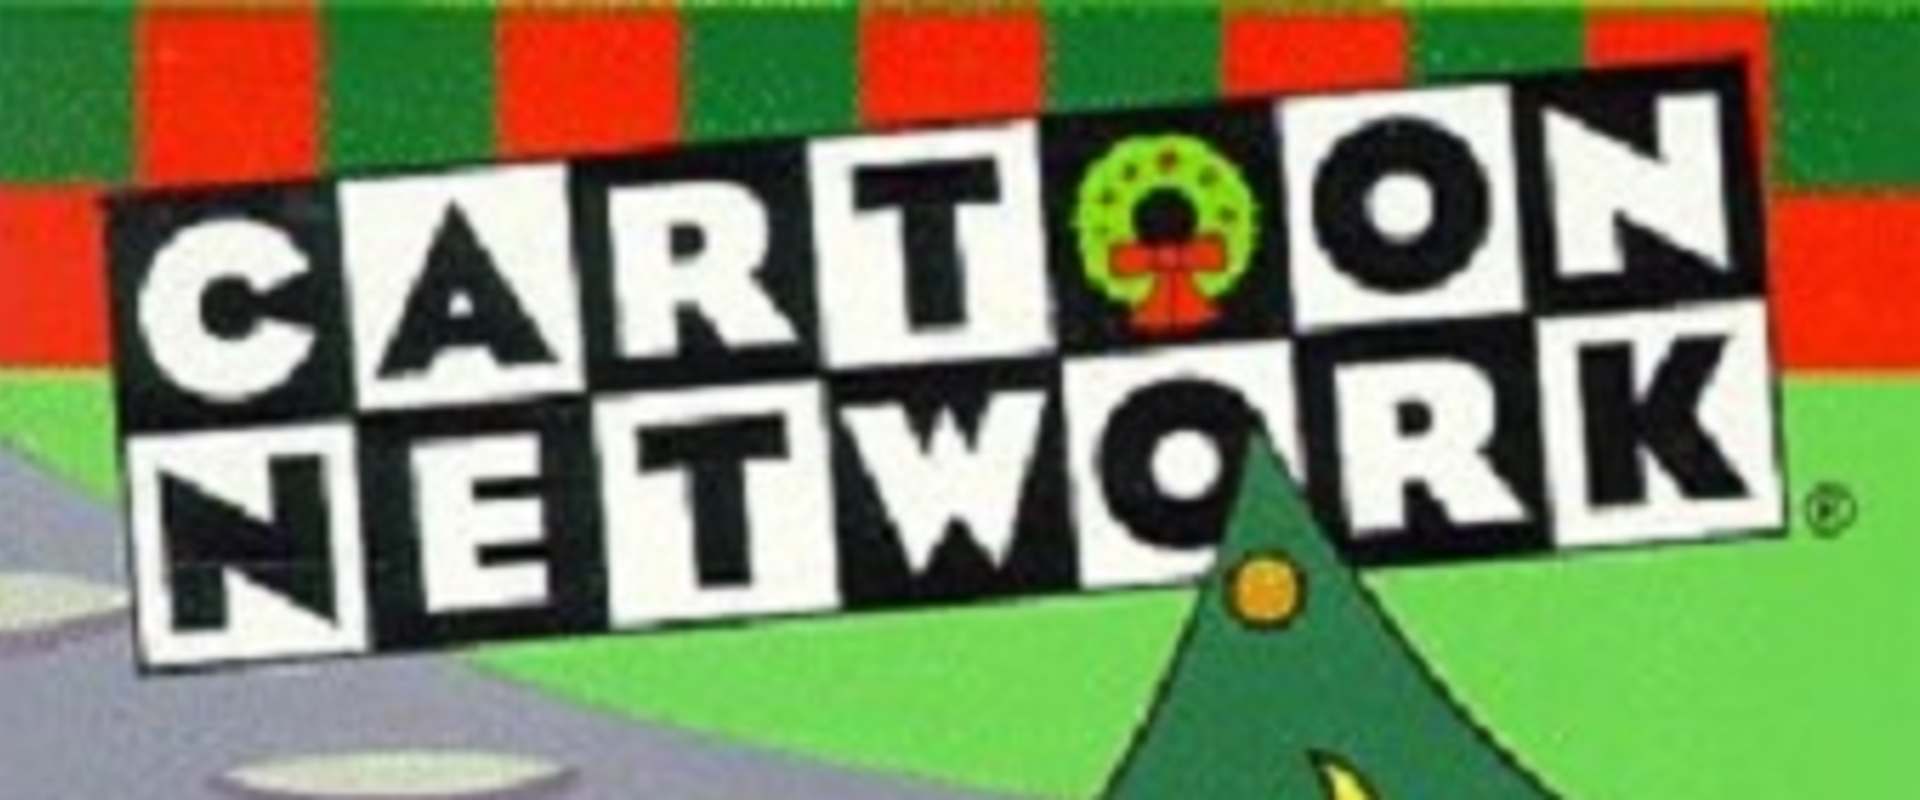 A Jetson Christmas Carol background 2